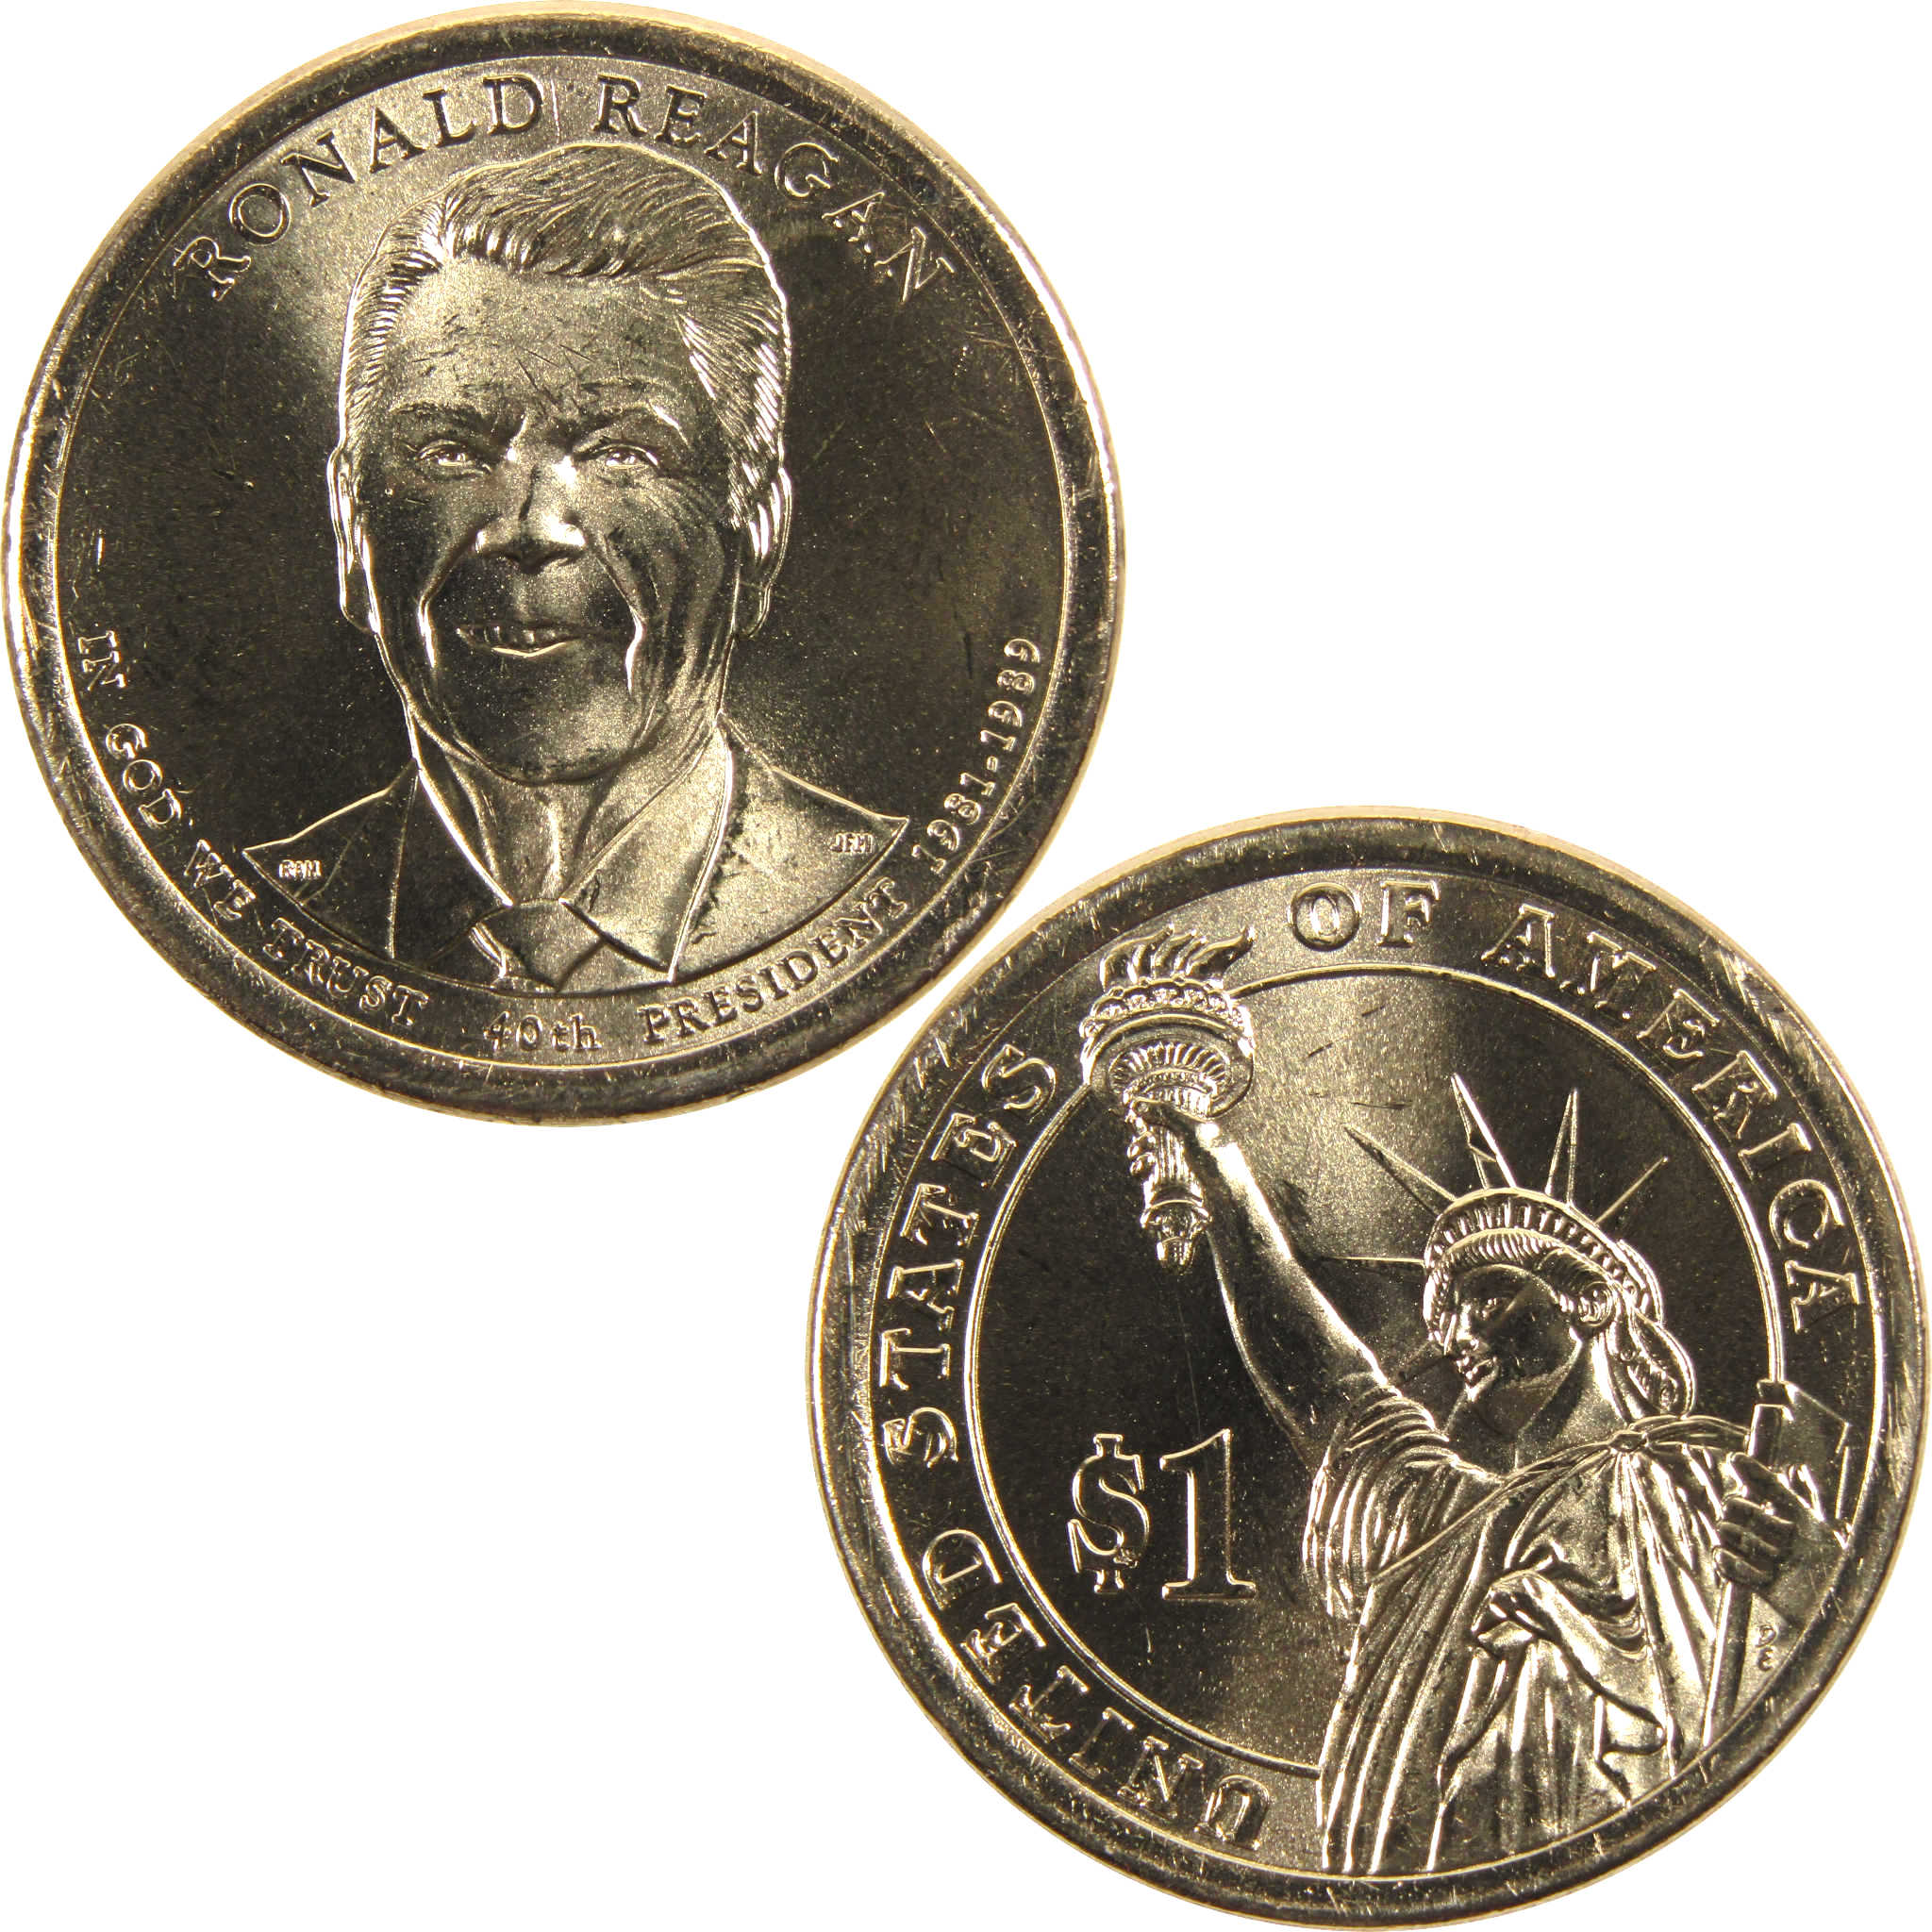 2016 D Ronald Reagan Presidential Dollar BU Uncirculated $1 Coin